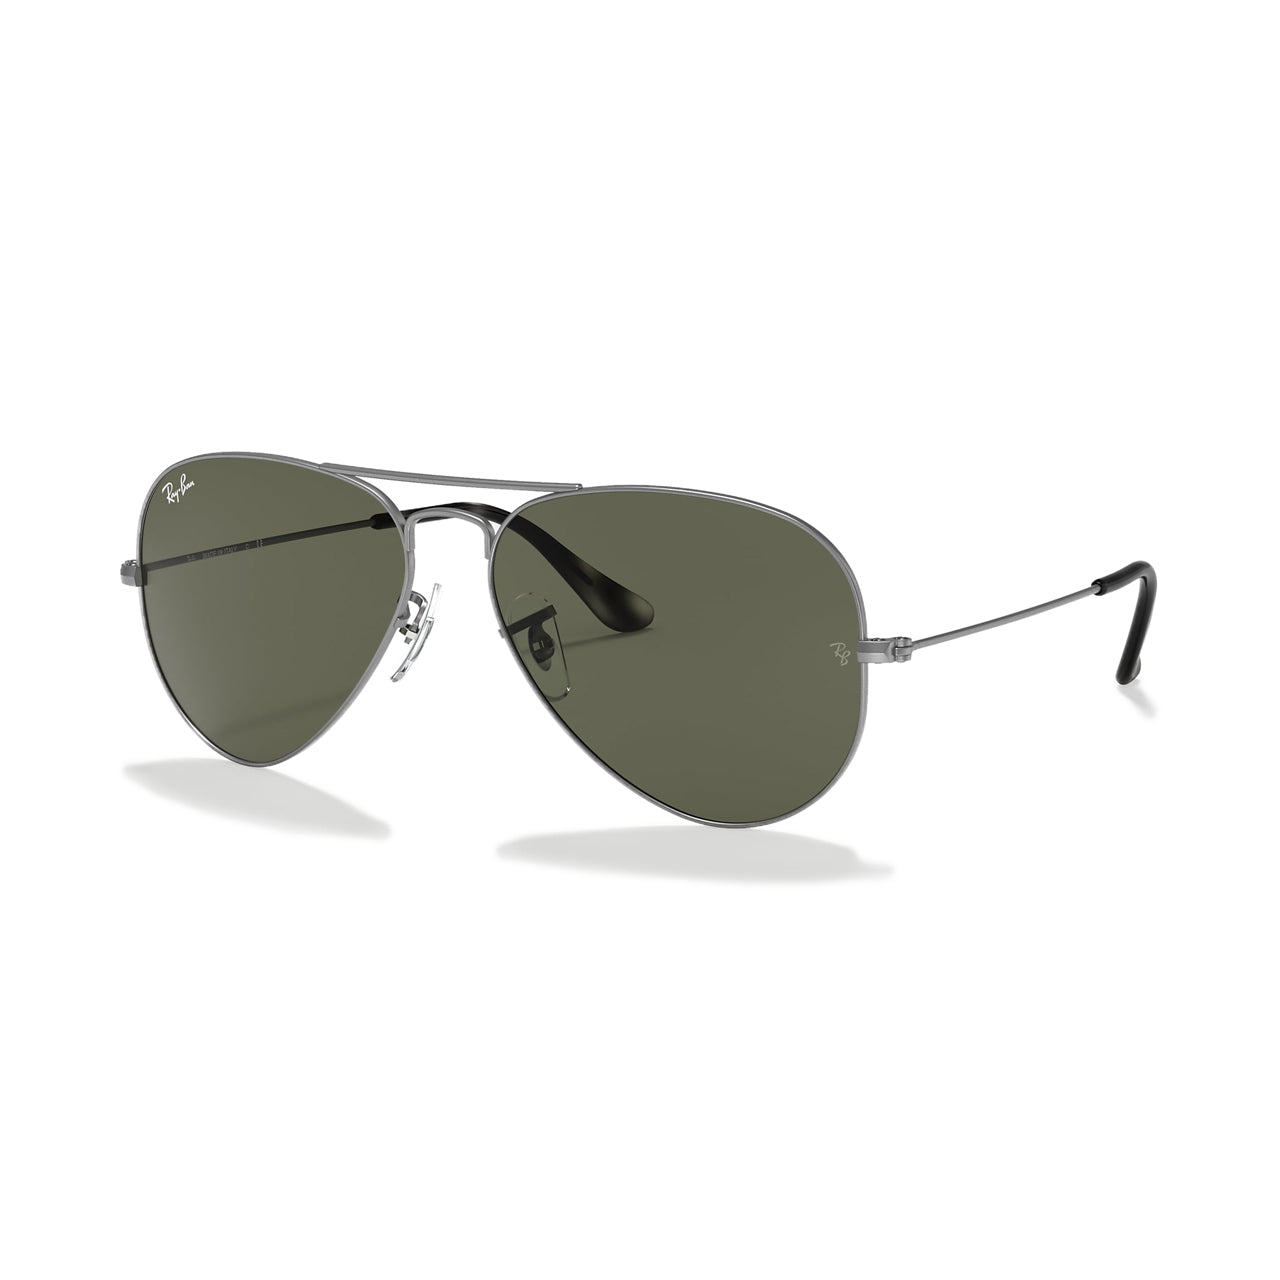 Ray Ban Men's Aviator Classic Pilot Sunglasses